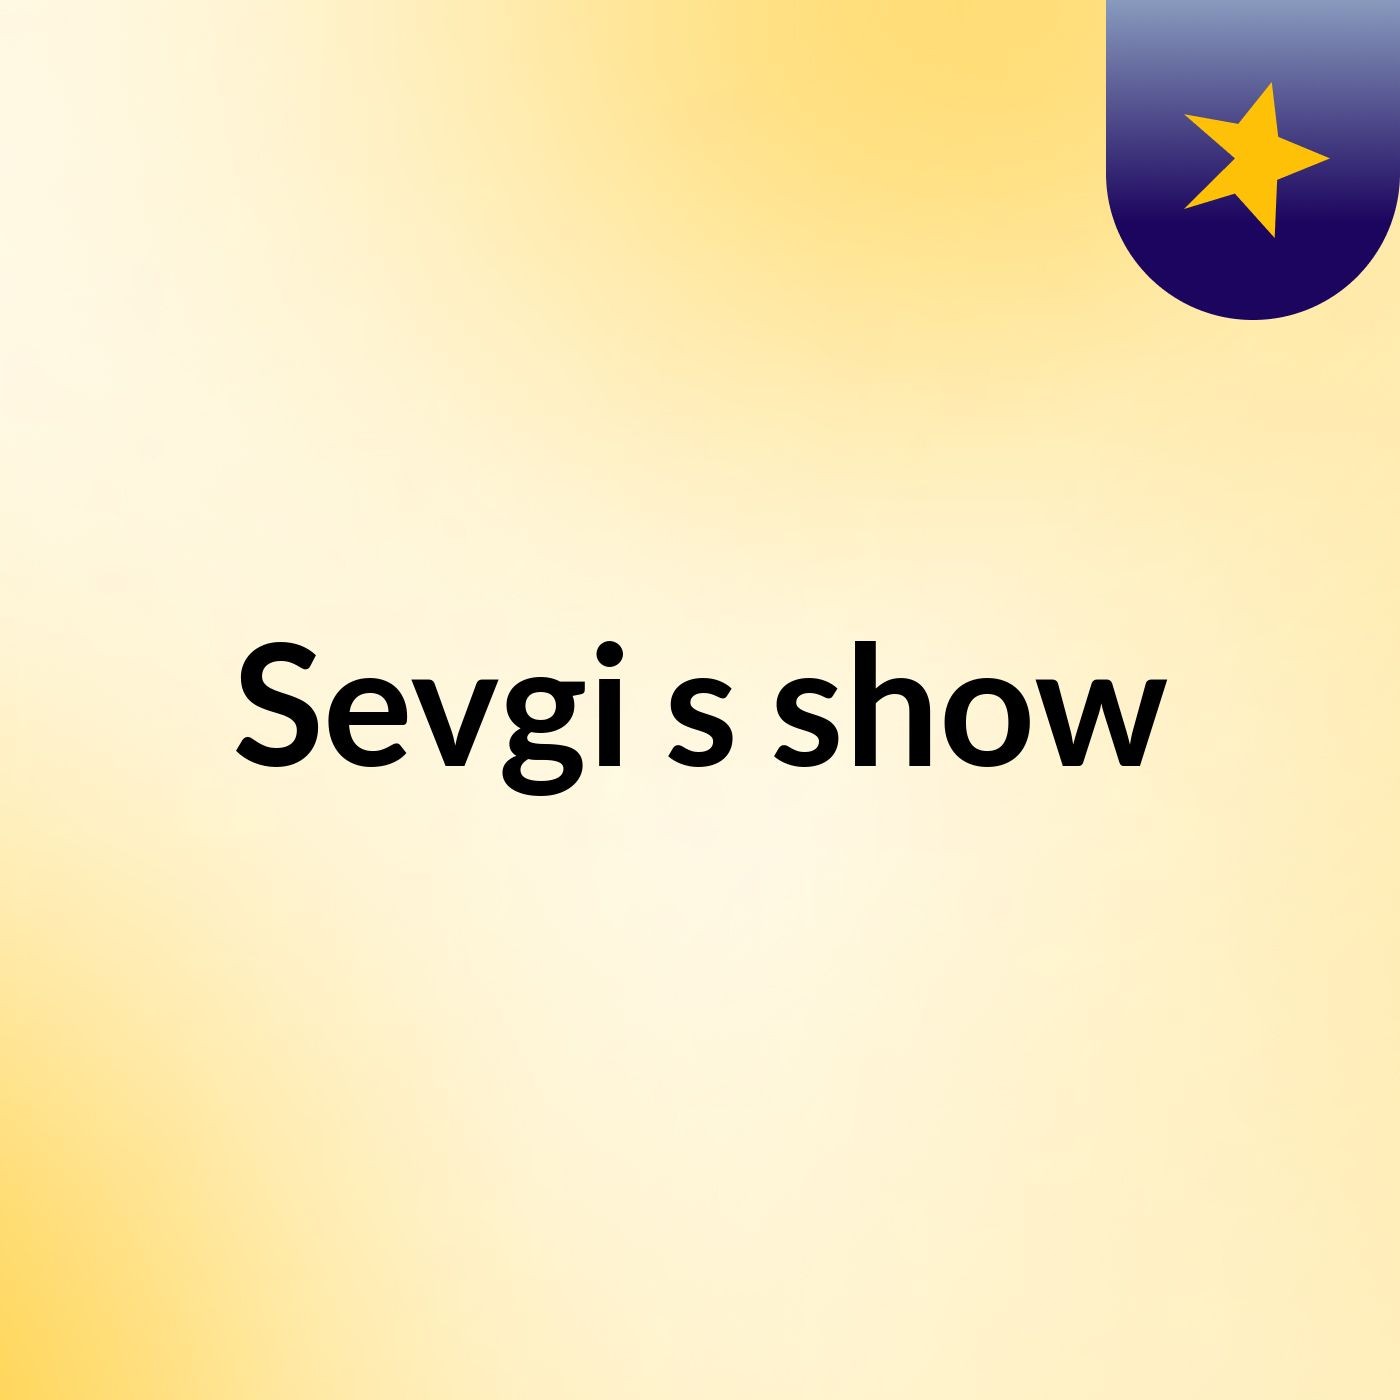 Sevgi's show